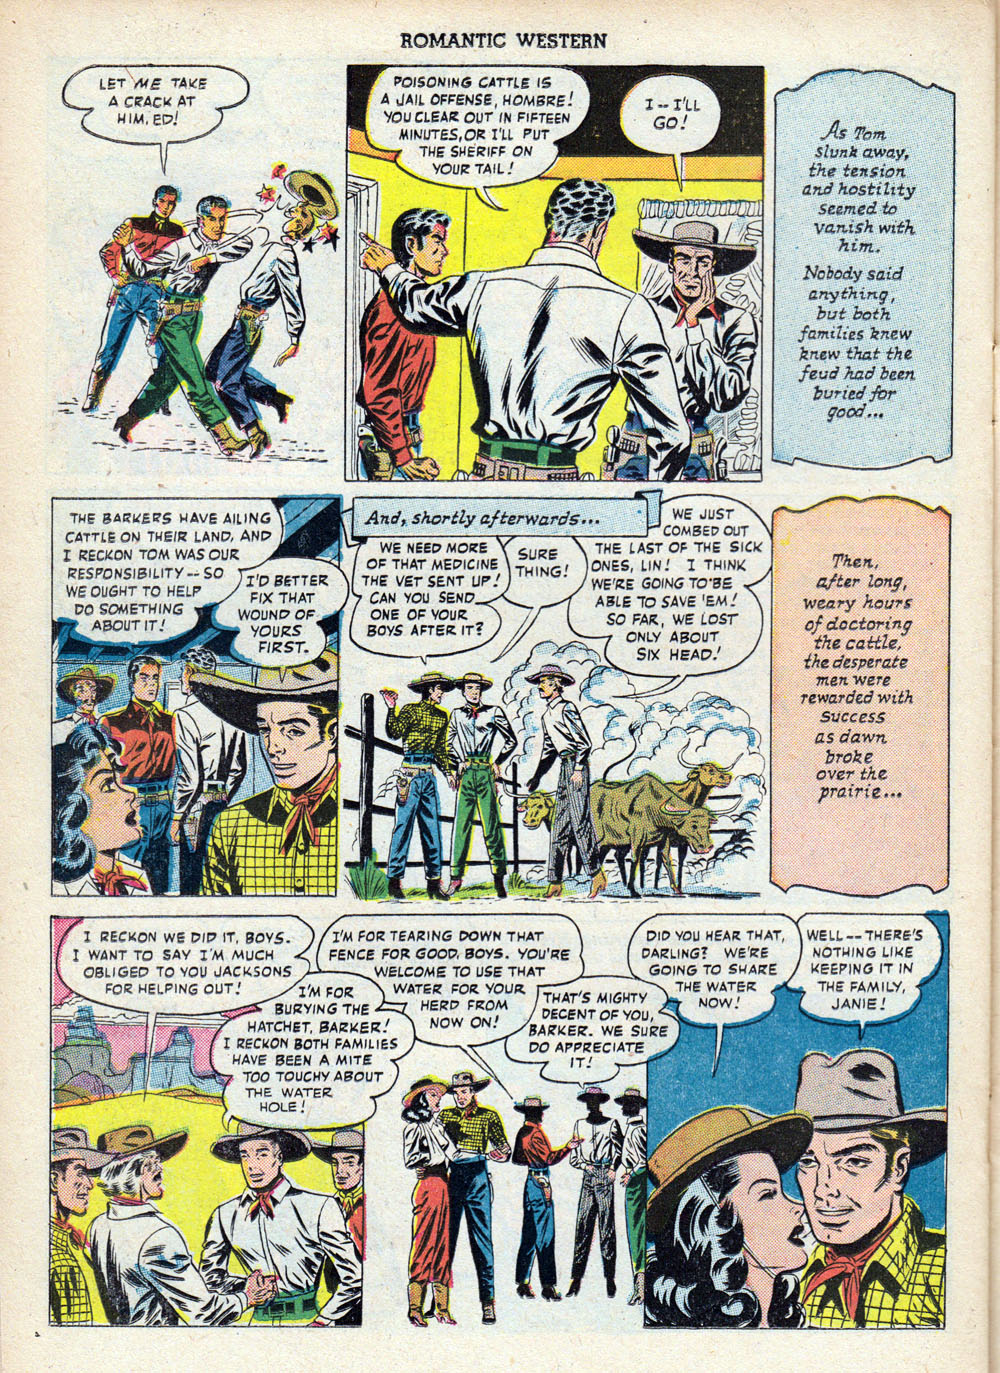 Read online Romantic Western comic -  Issue #1 - 22